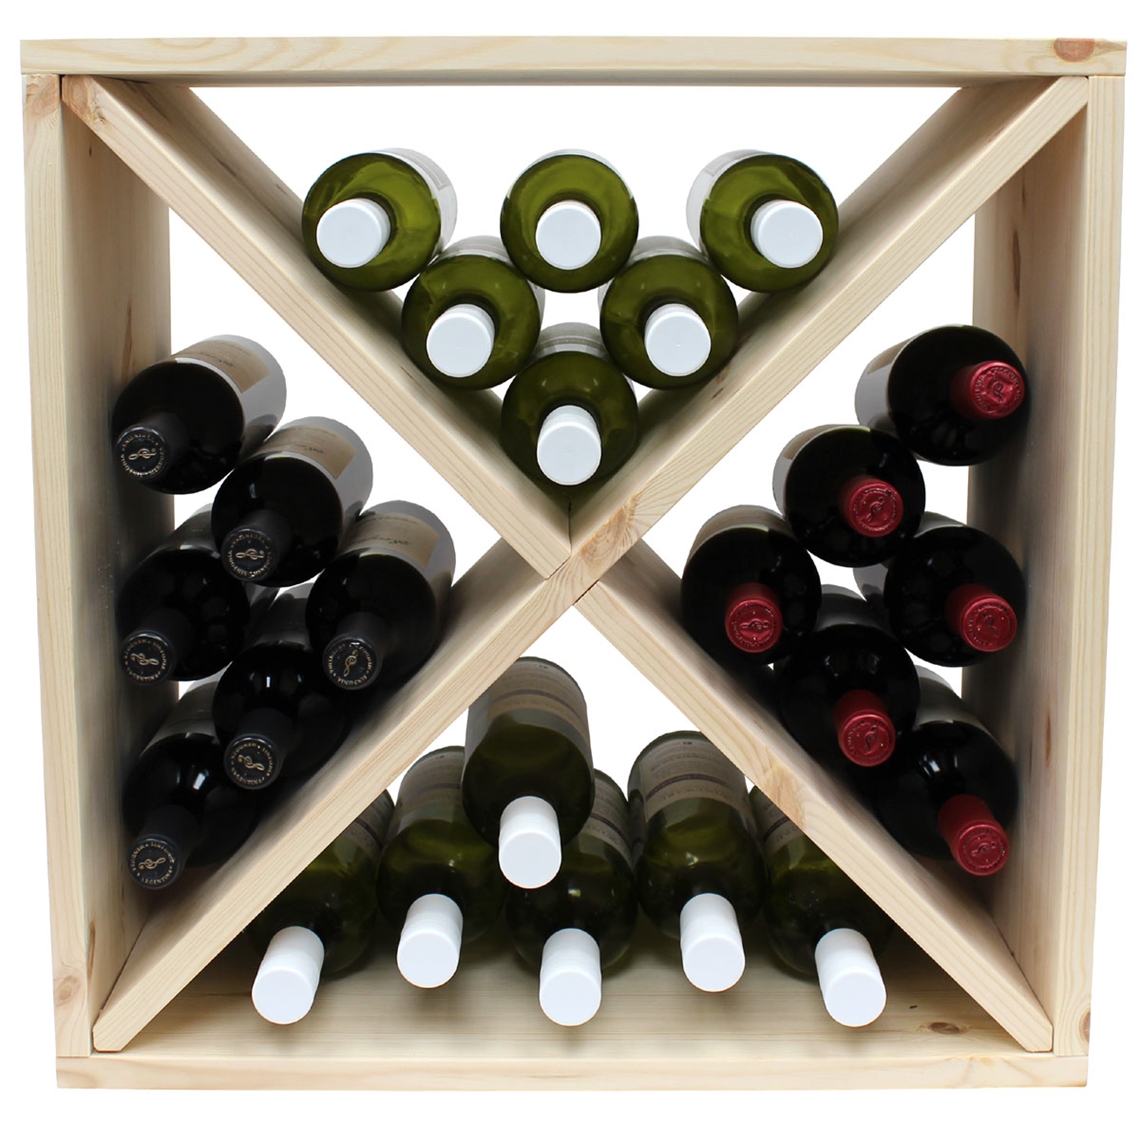 Pine Wooden Wine Rack - Cellar Cube - 144 Bottles - 298mm Deep - Set of 6